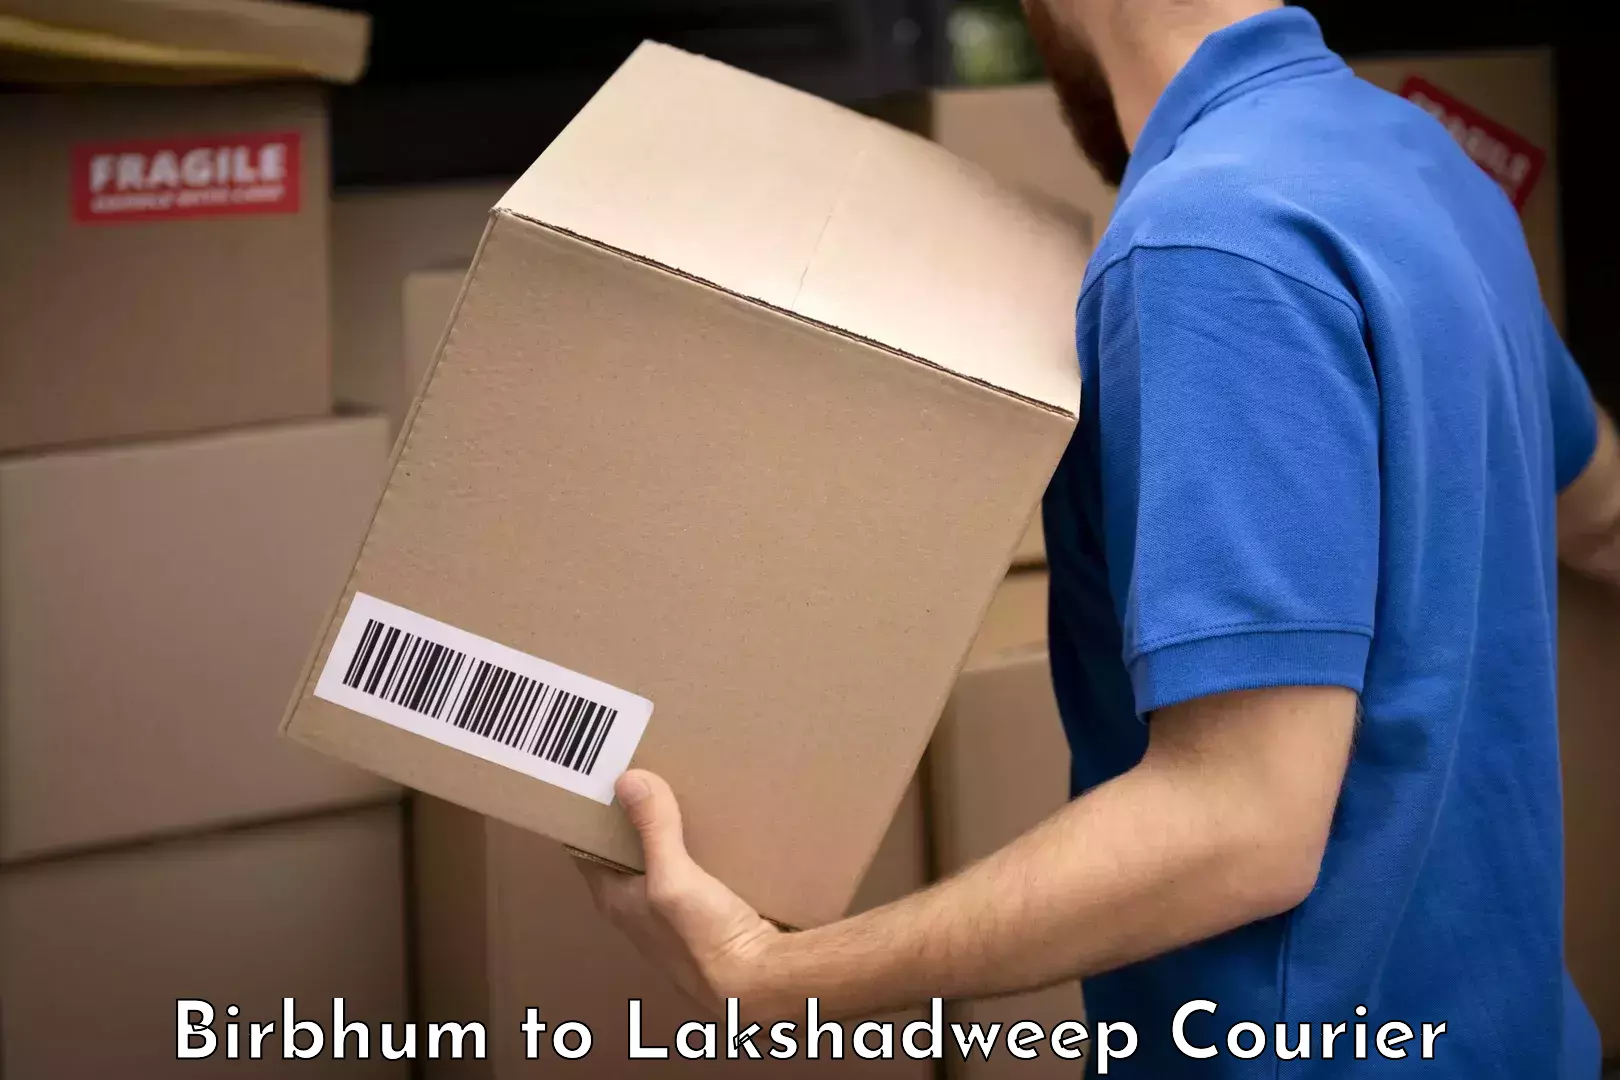 Luggage shipment specialists Birbhum to Lakshadweep